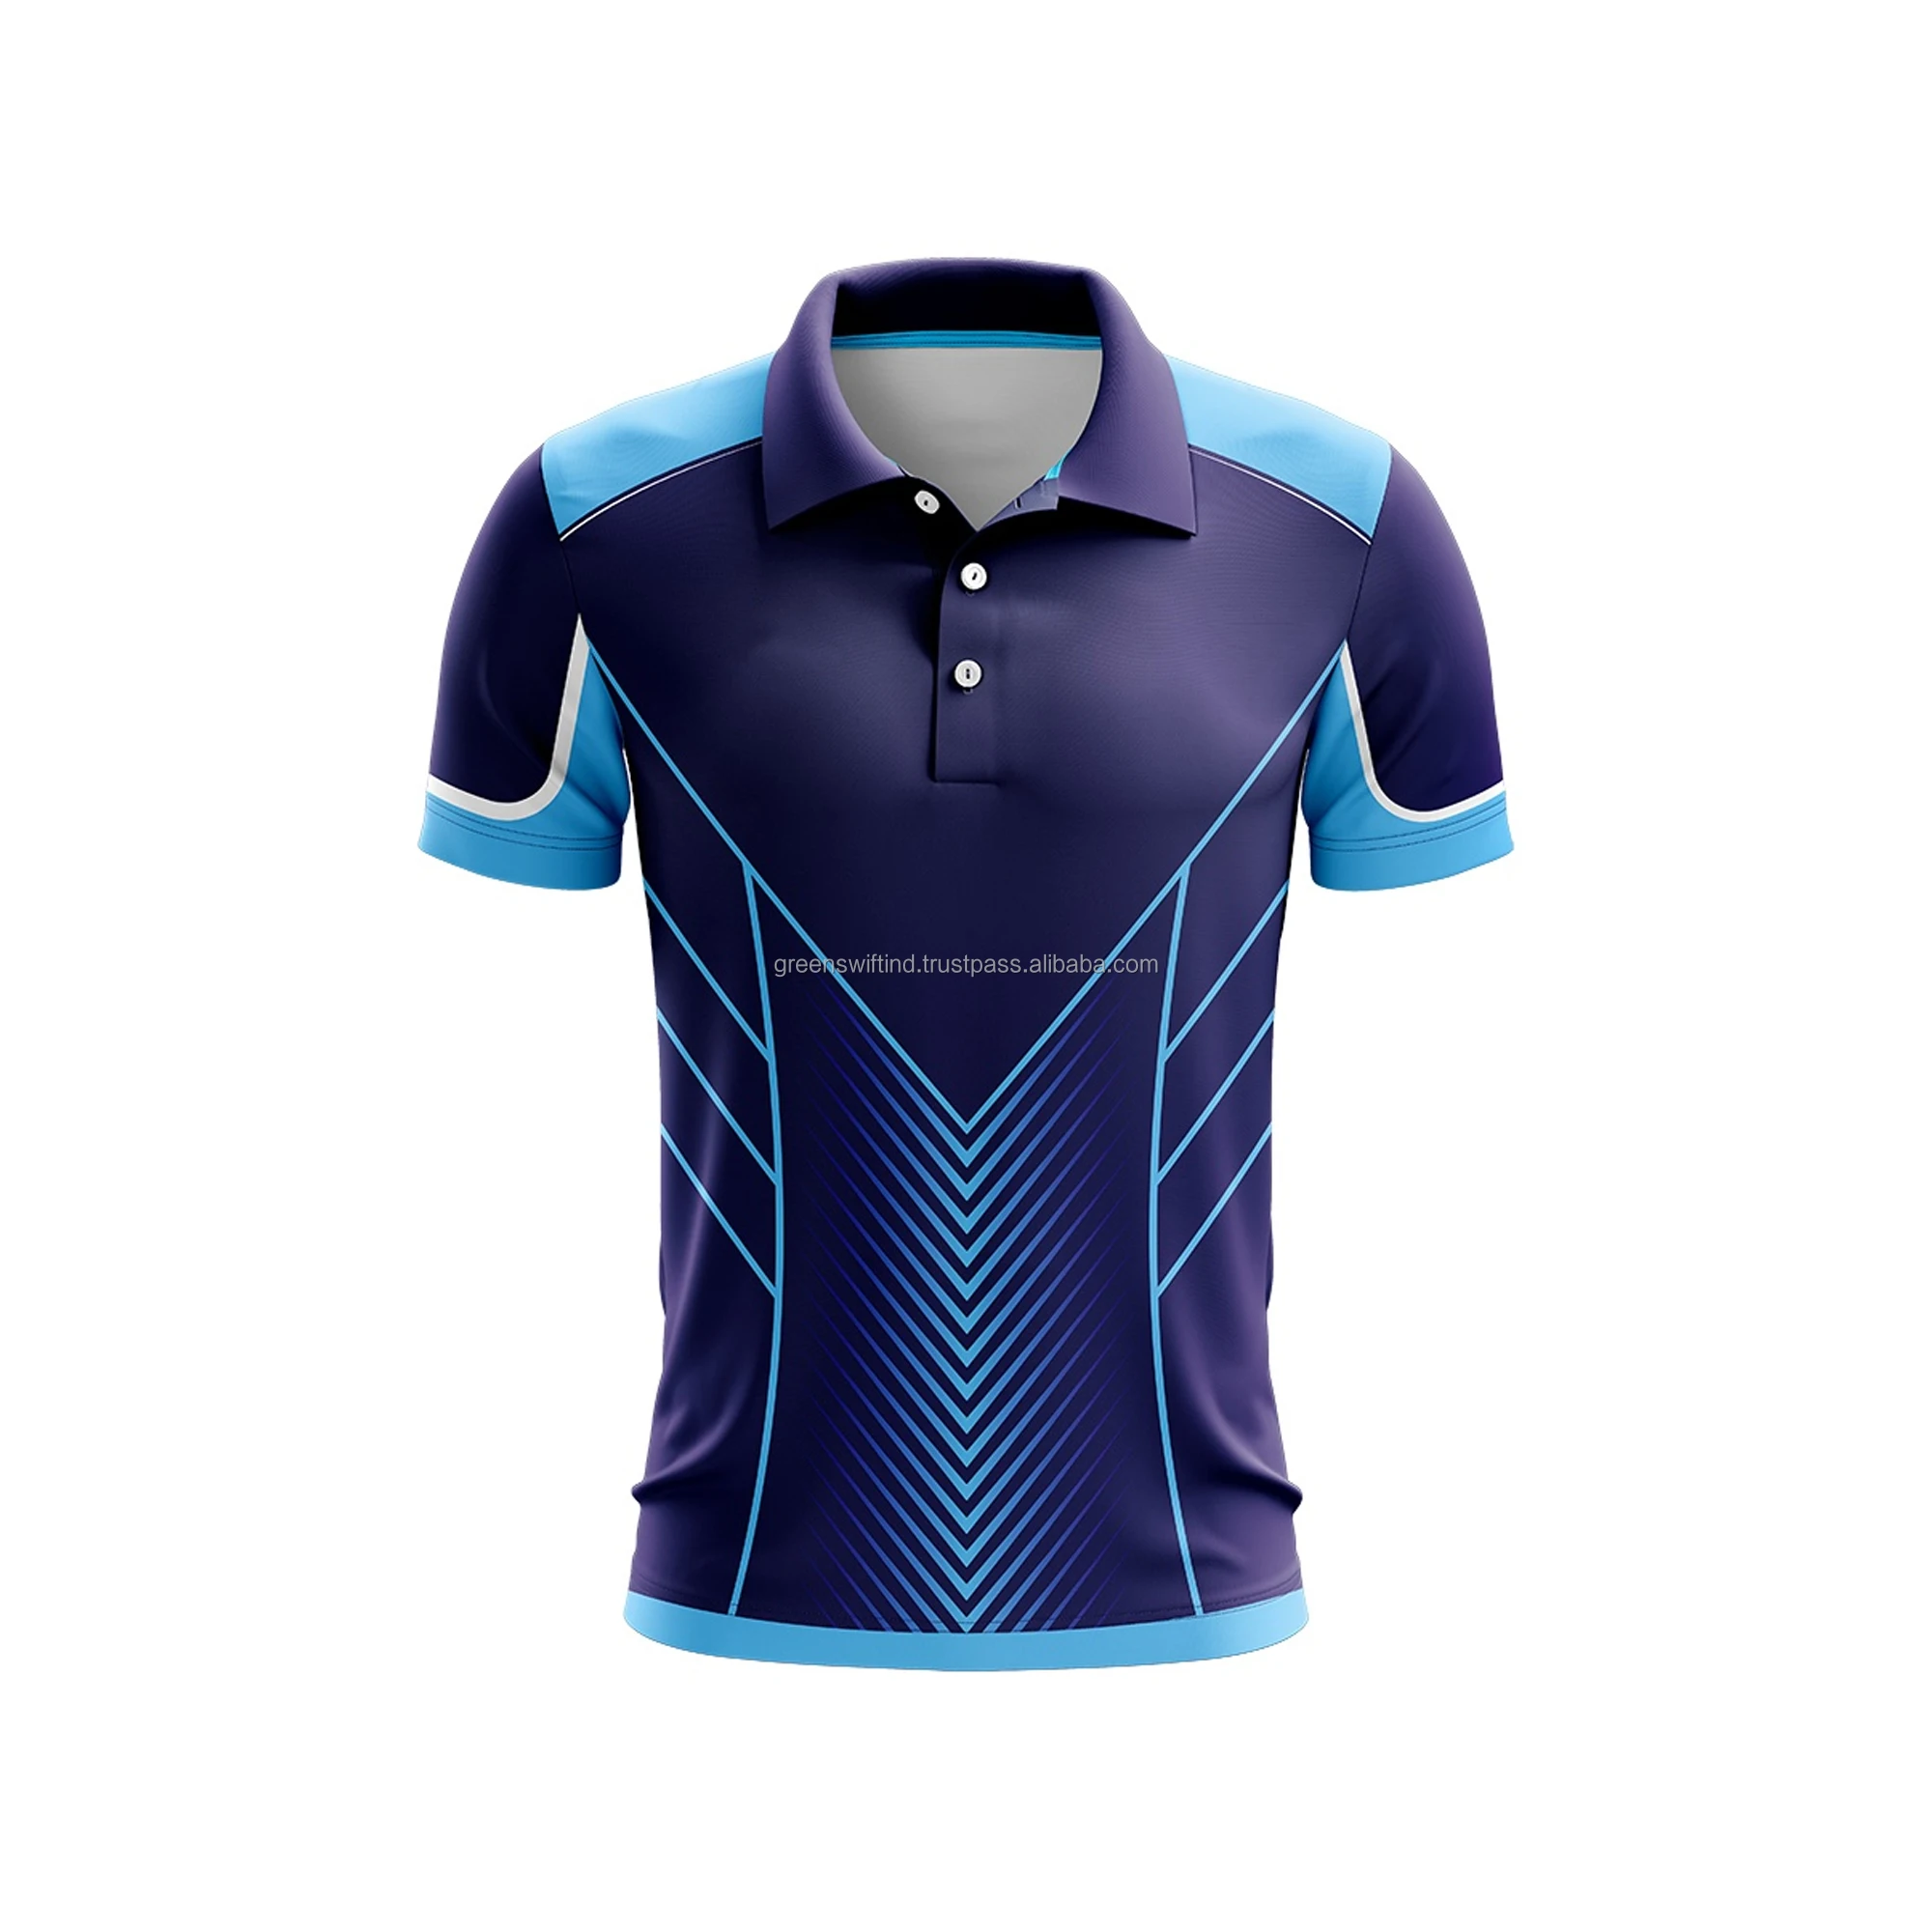 Cricket Jersey design Dark and Light Blue